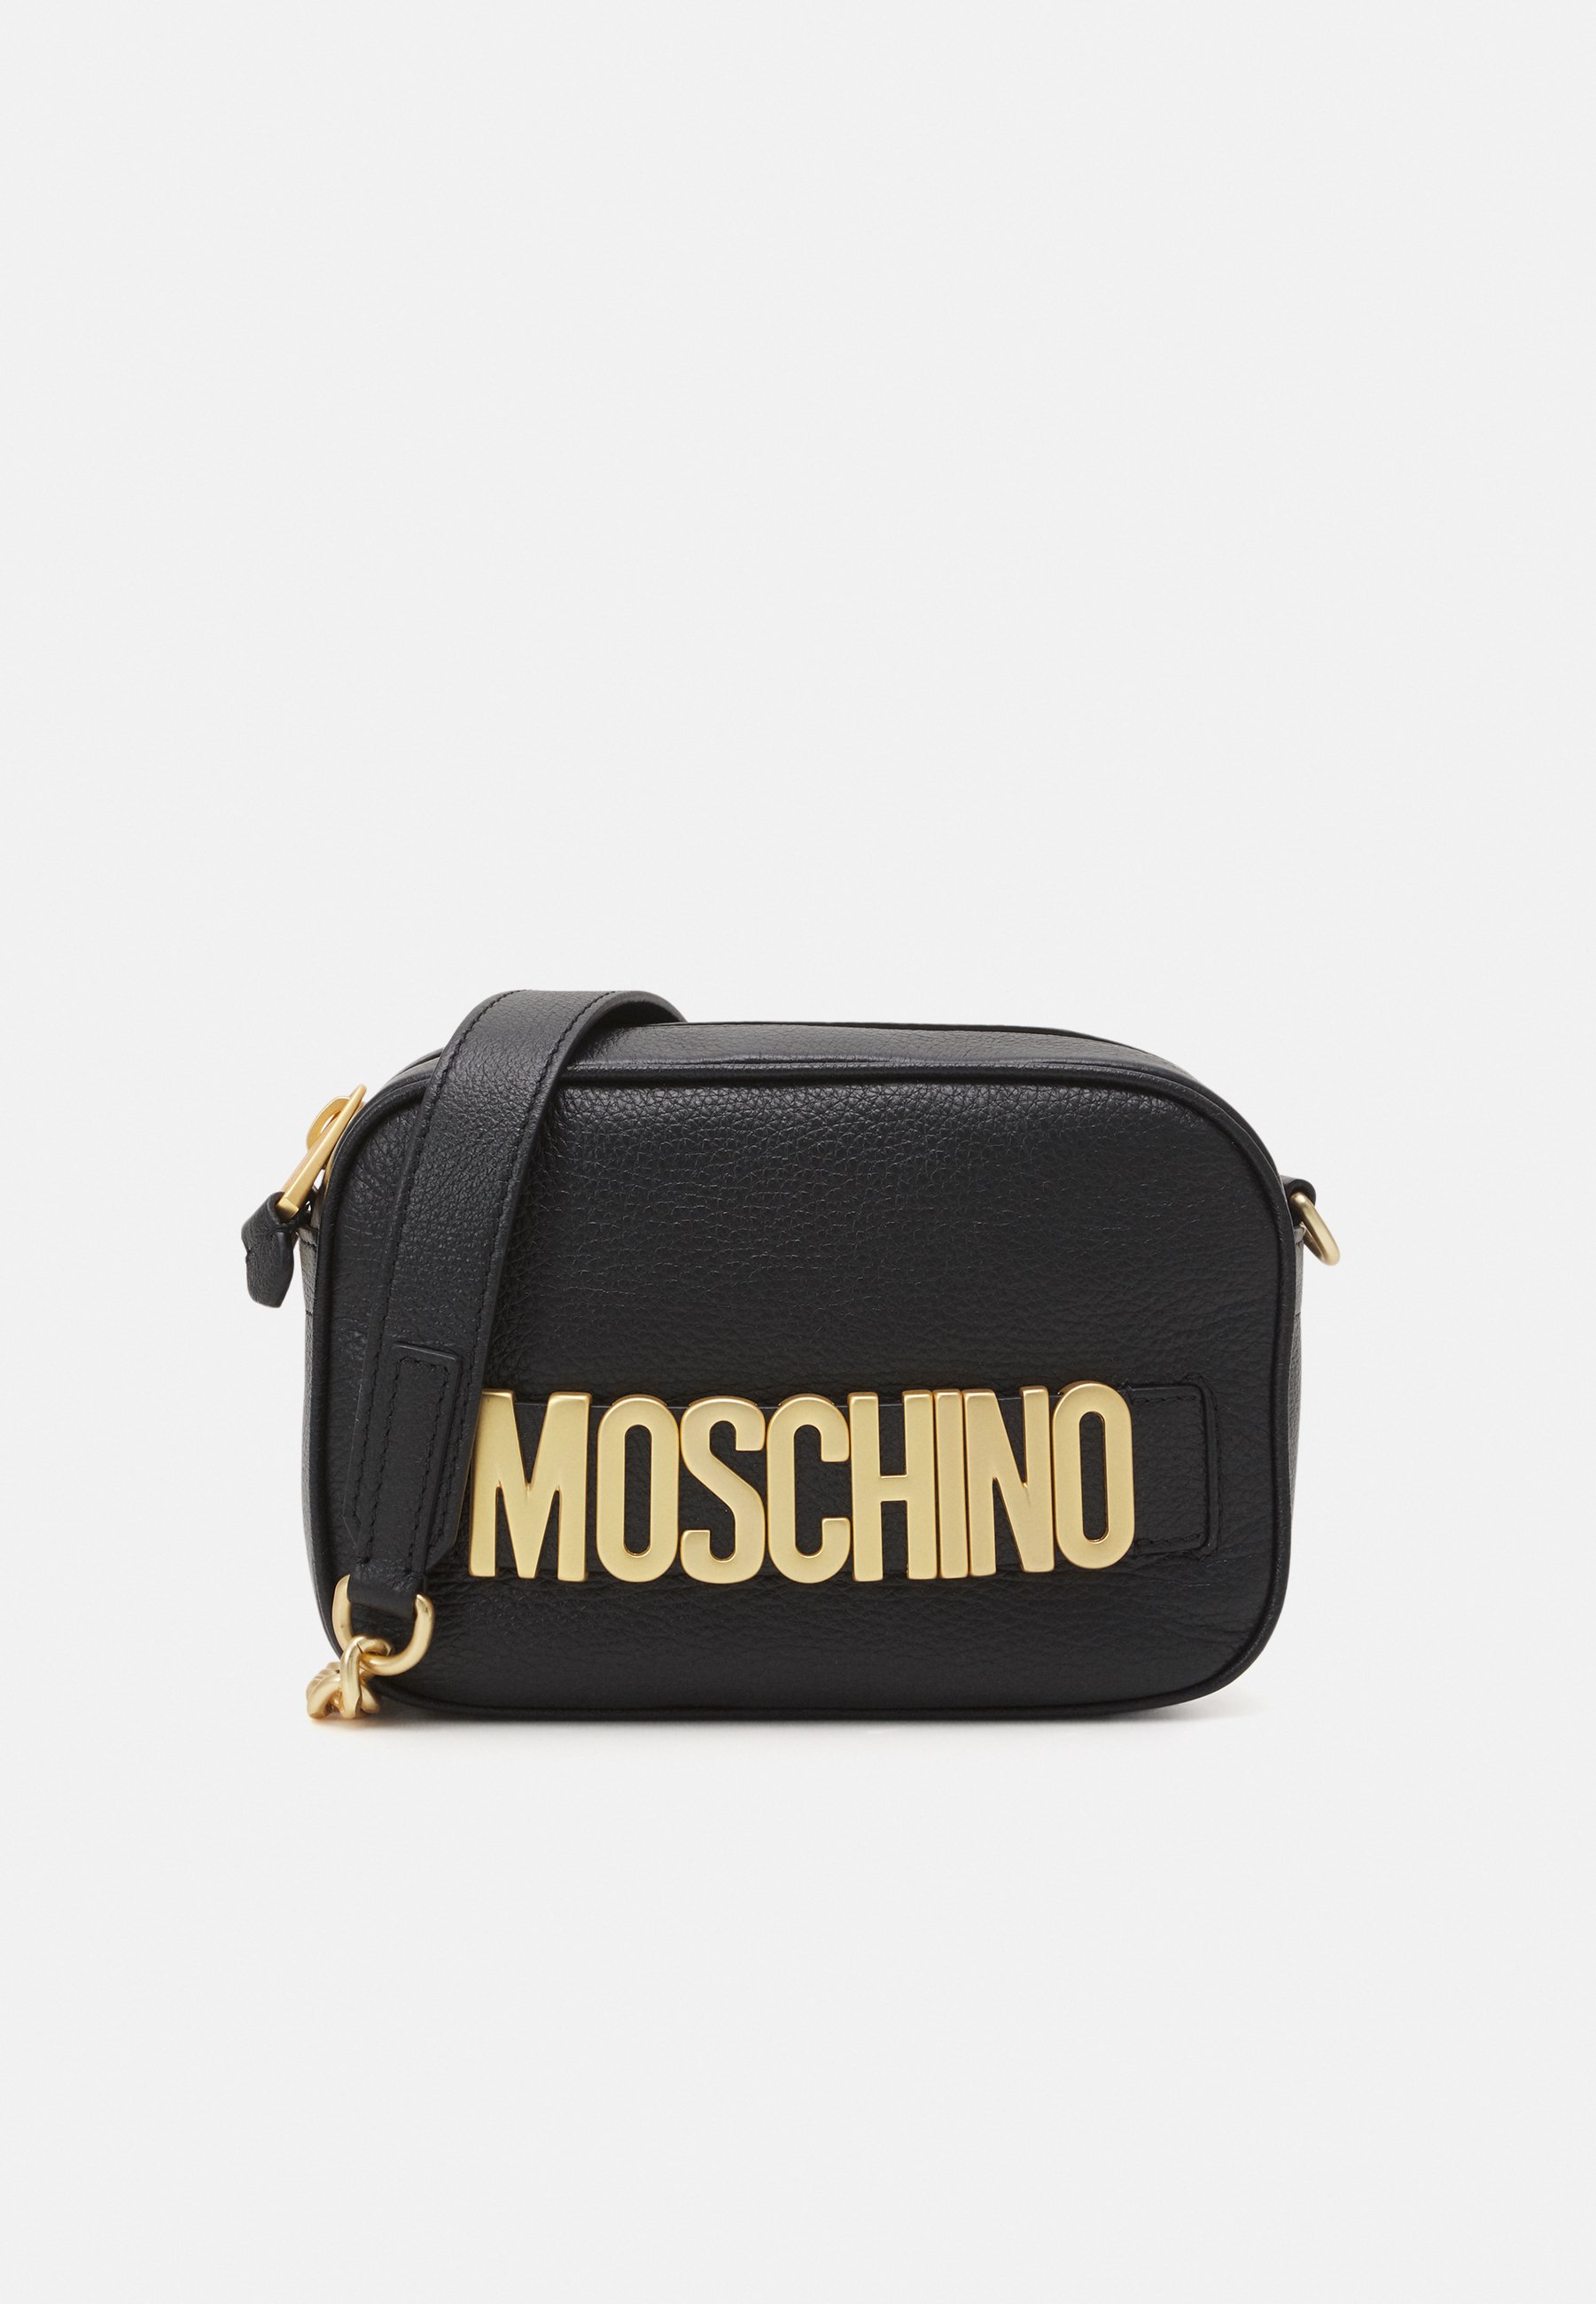 moschino purse black